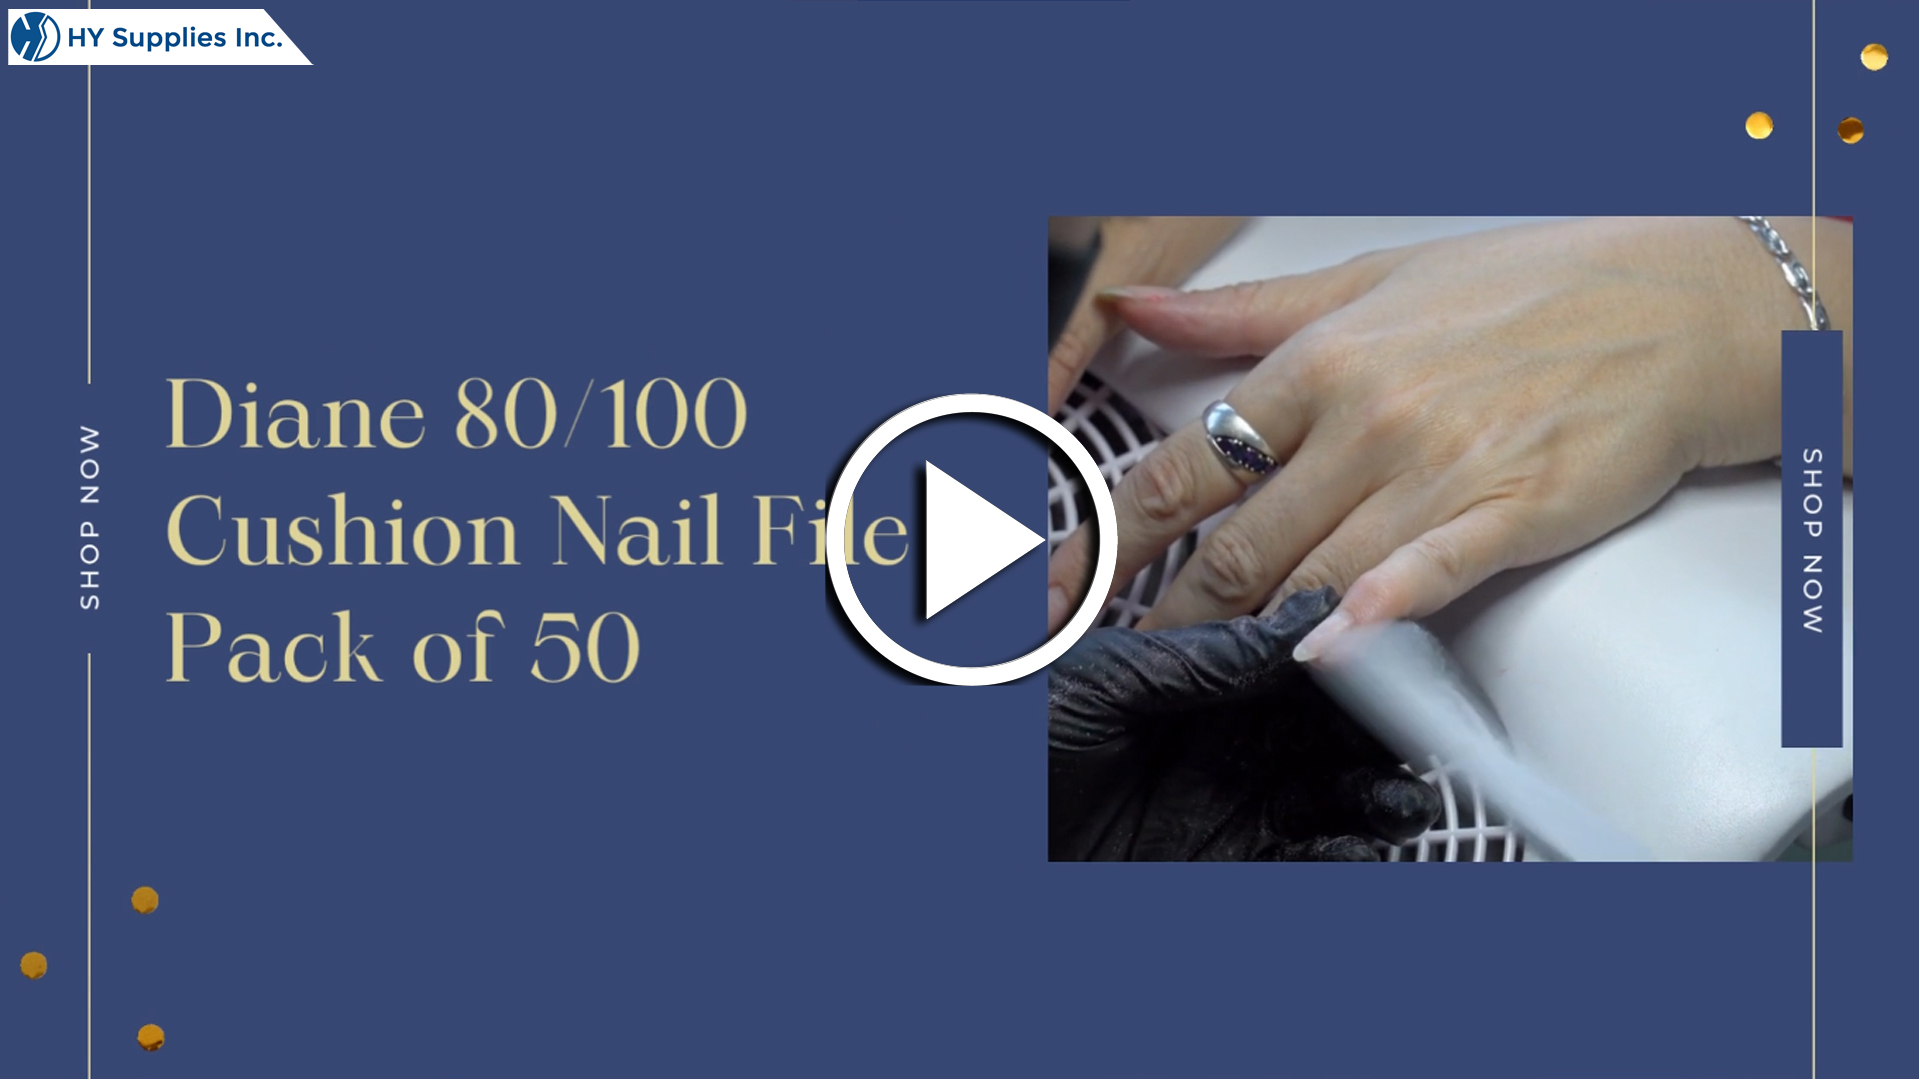 Diane 80/100 Cushion Nail File - Pack of 50